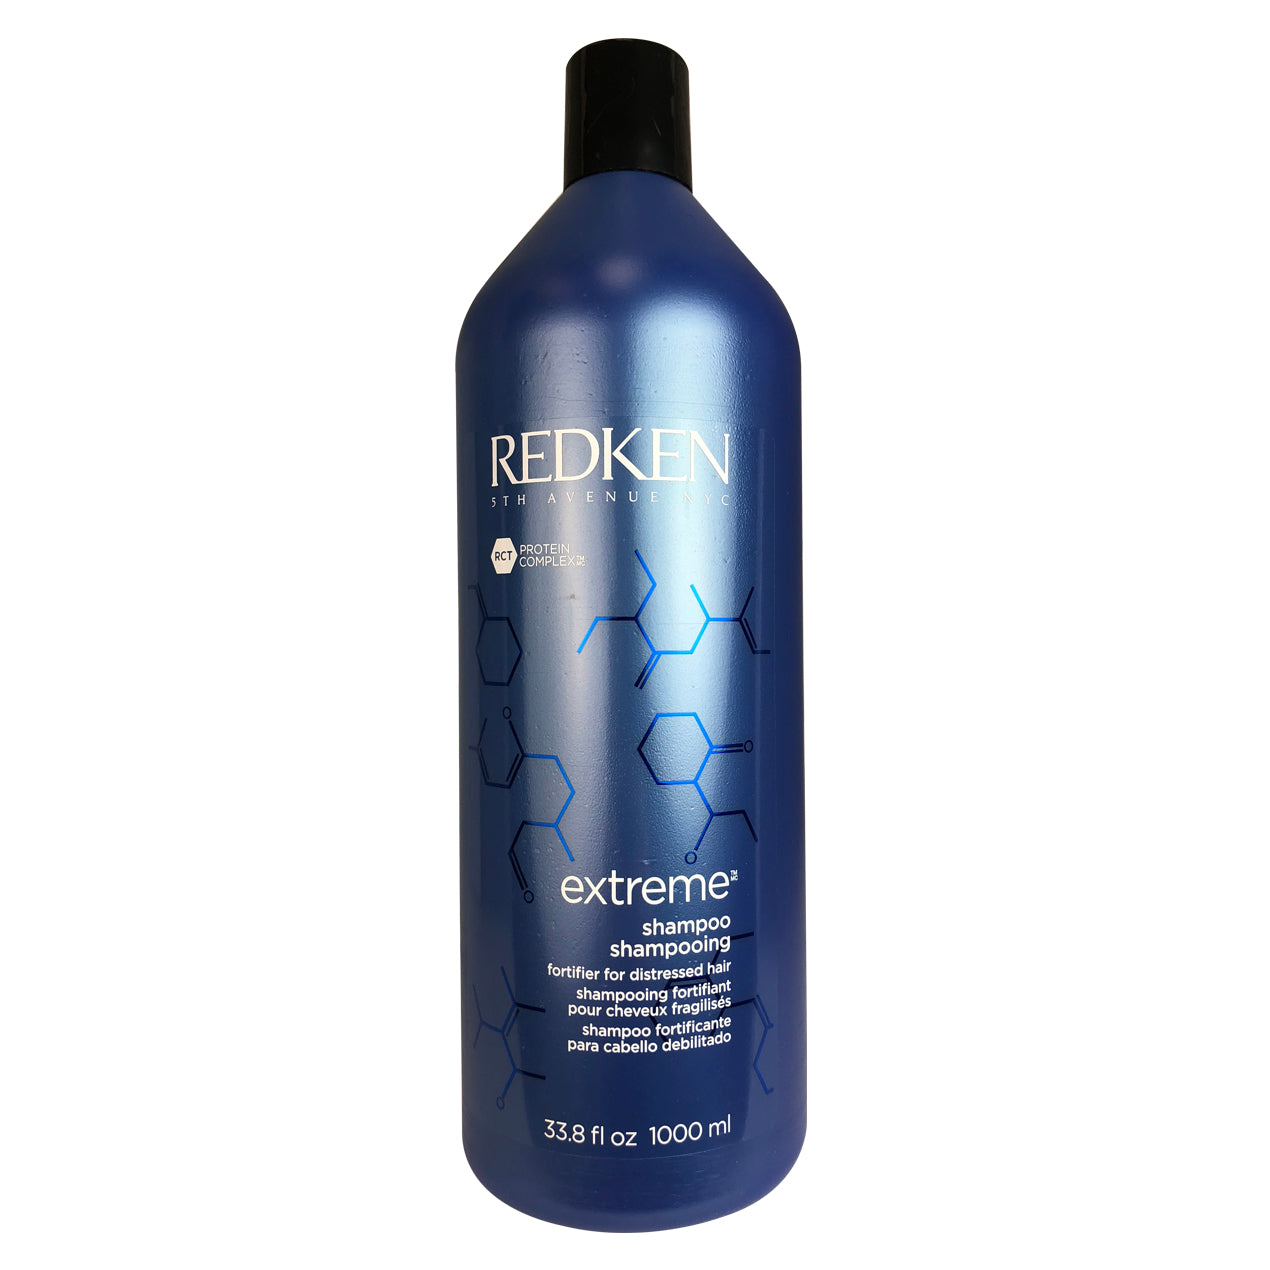 Redken Extreme Shampoo for Distressed Hair 1 Liter